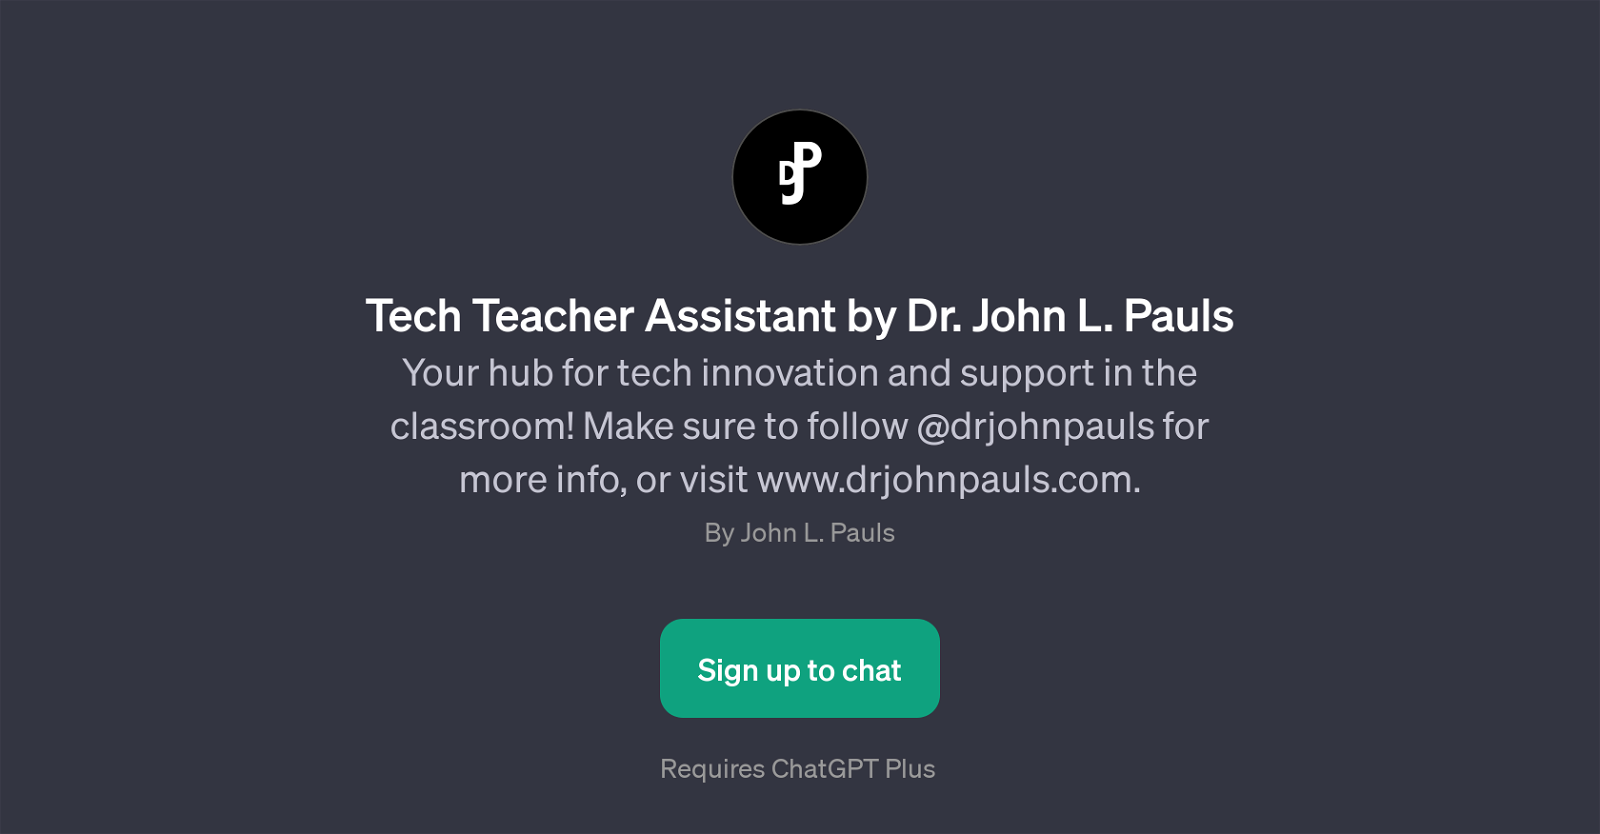 Tech Teacher Assistant by Dr. John L. Pauls website